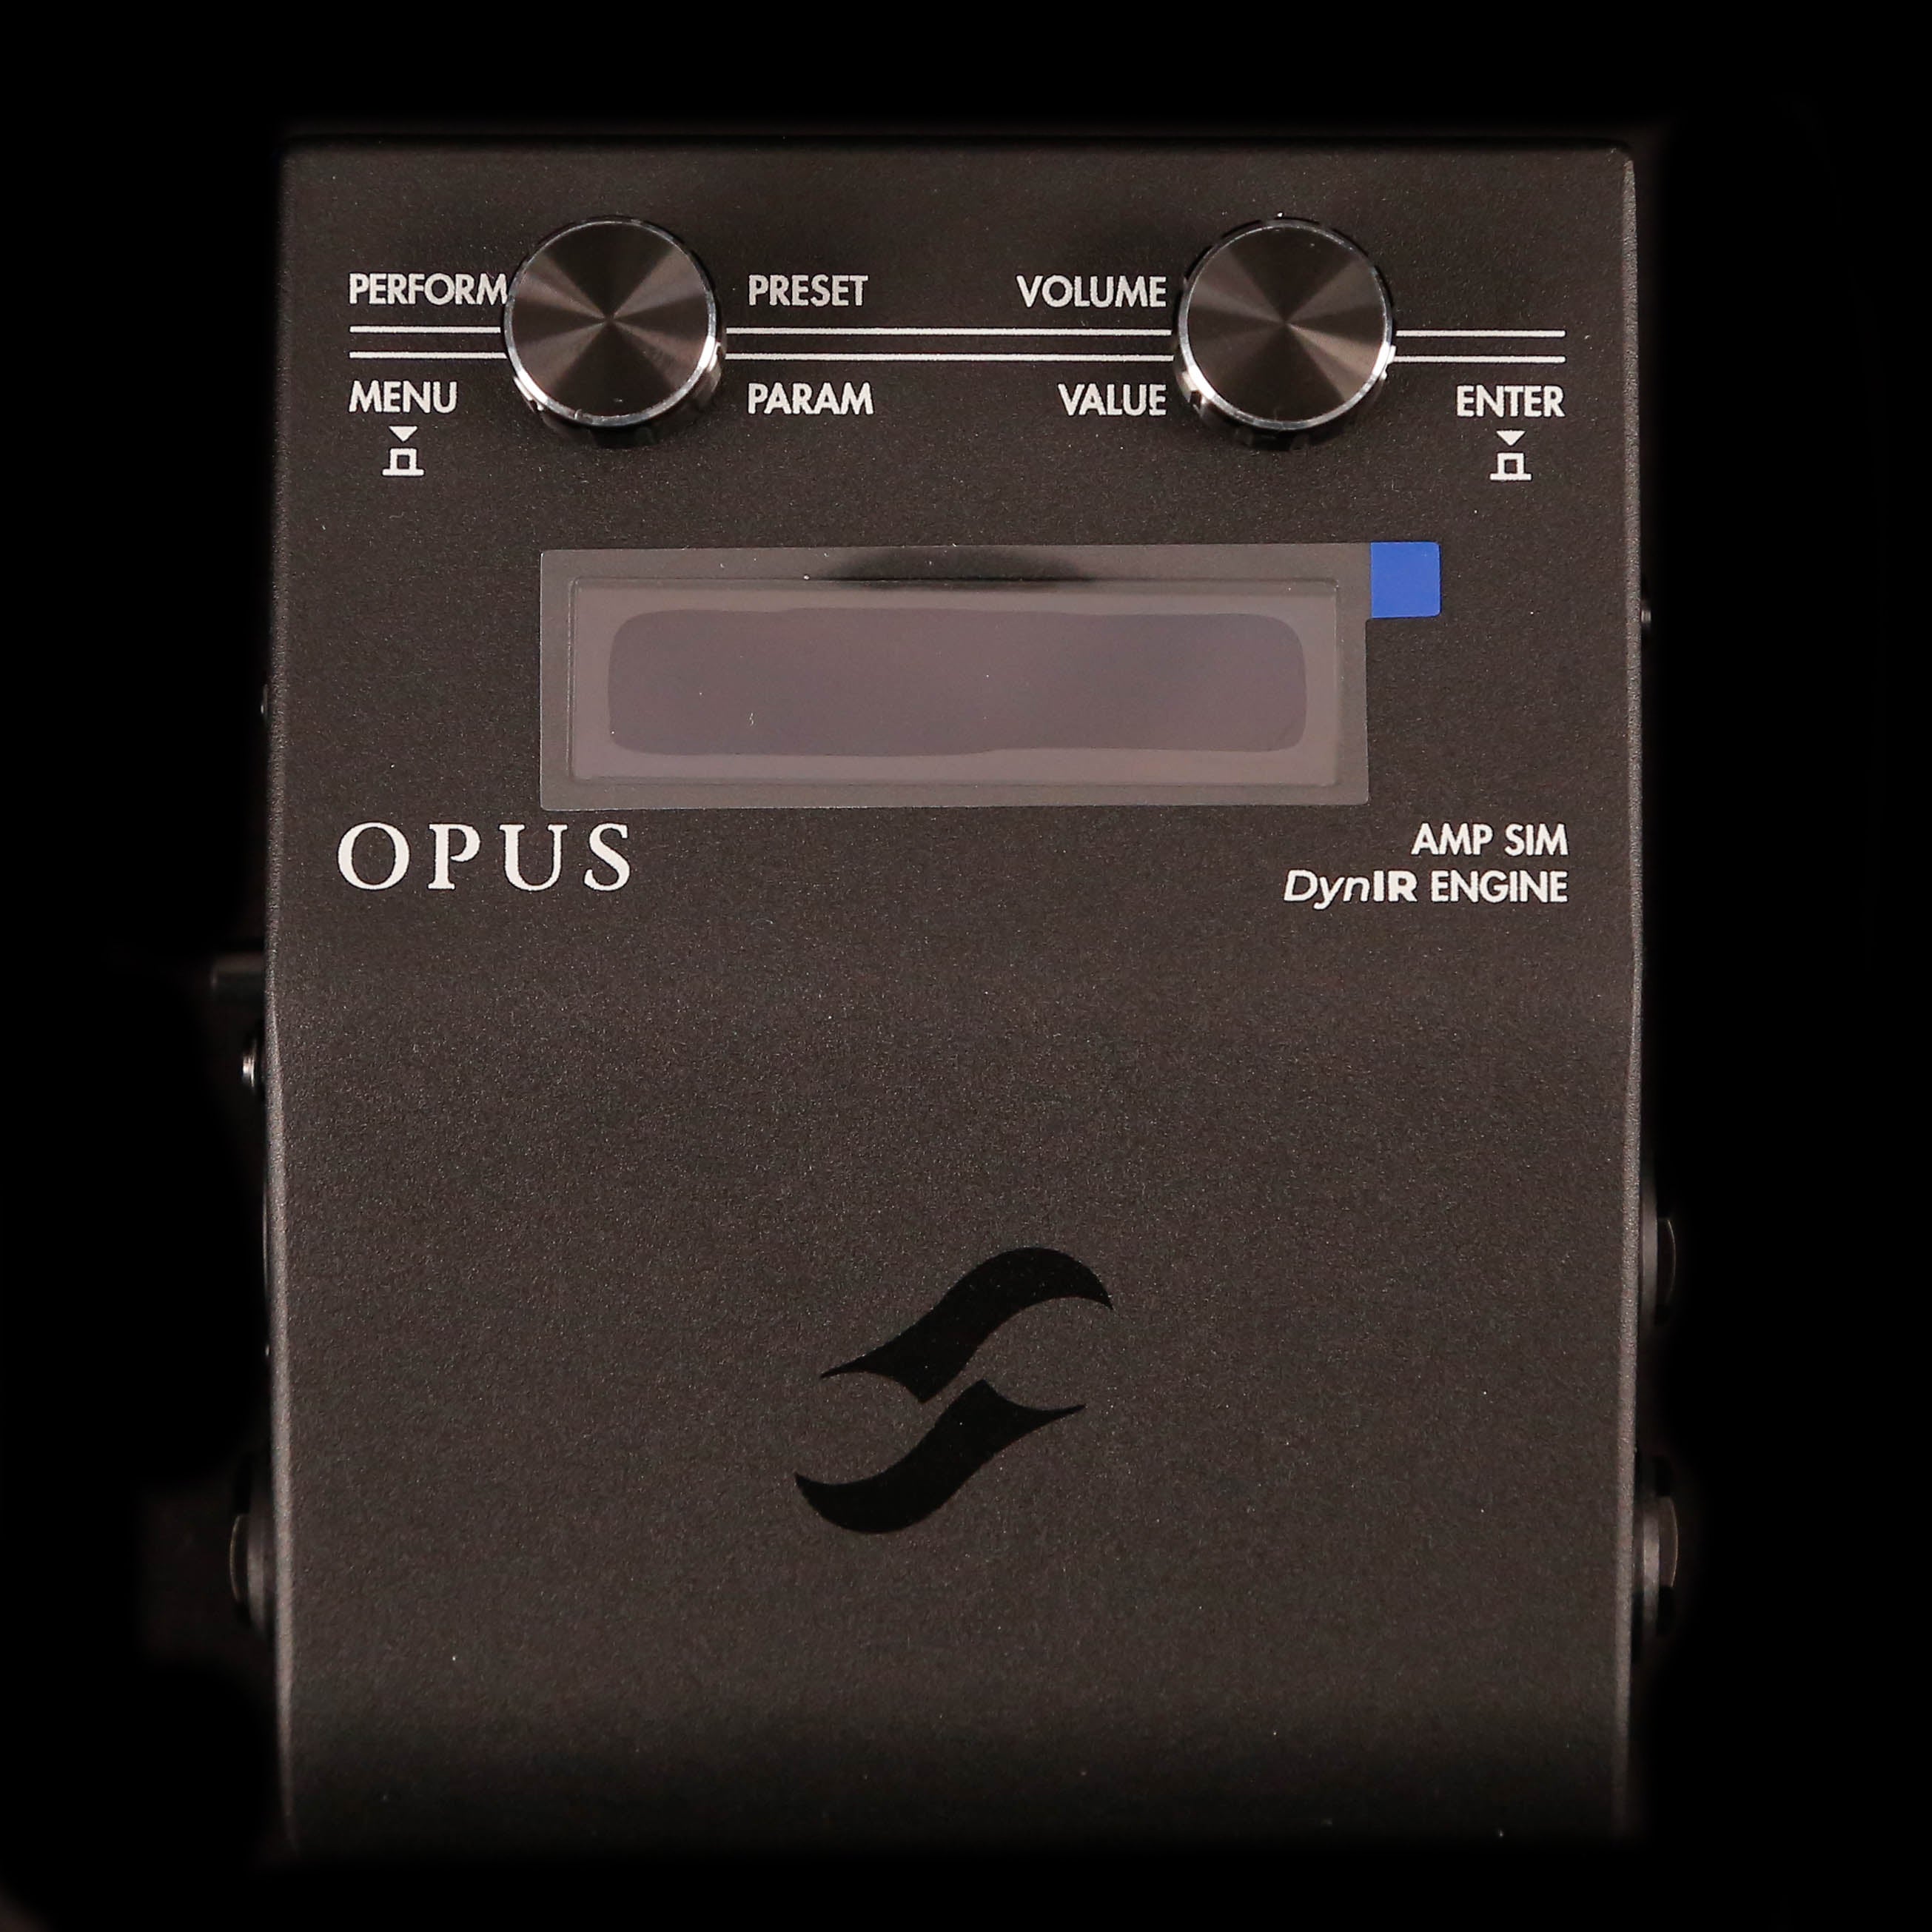 Two Notes OPUS Digital Audio Processor